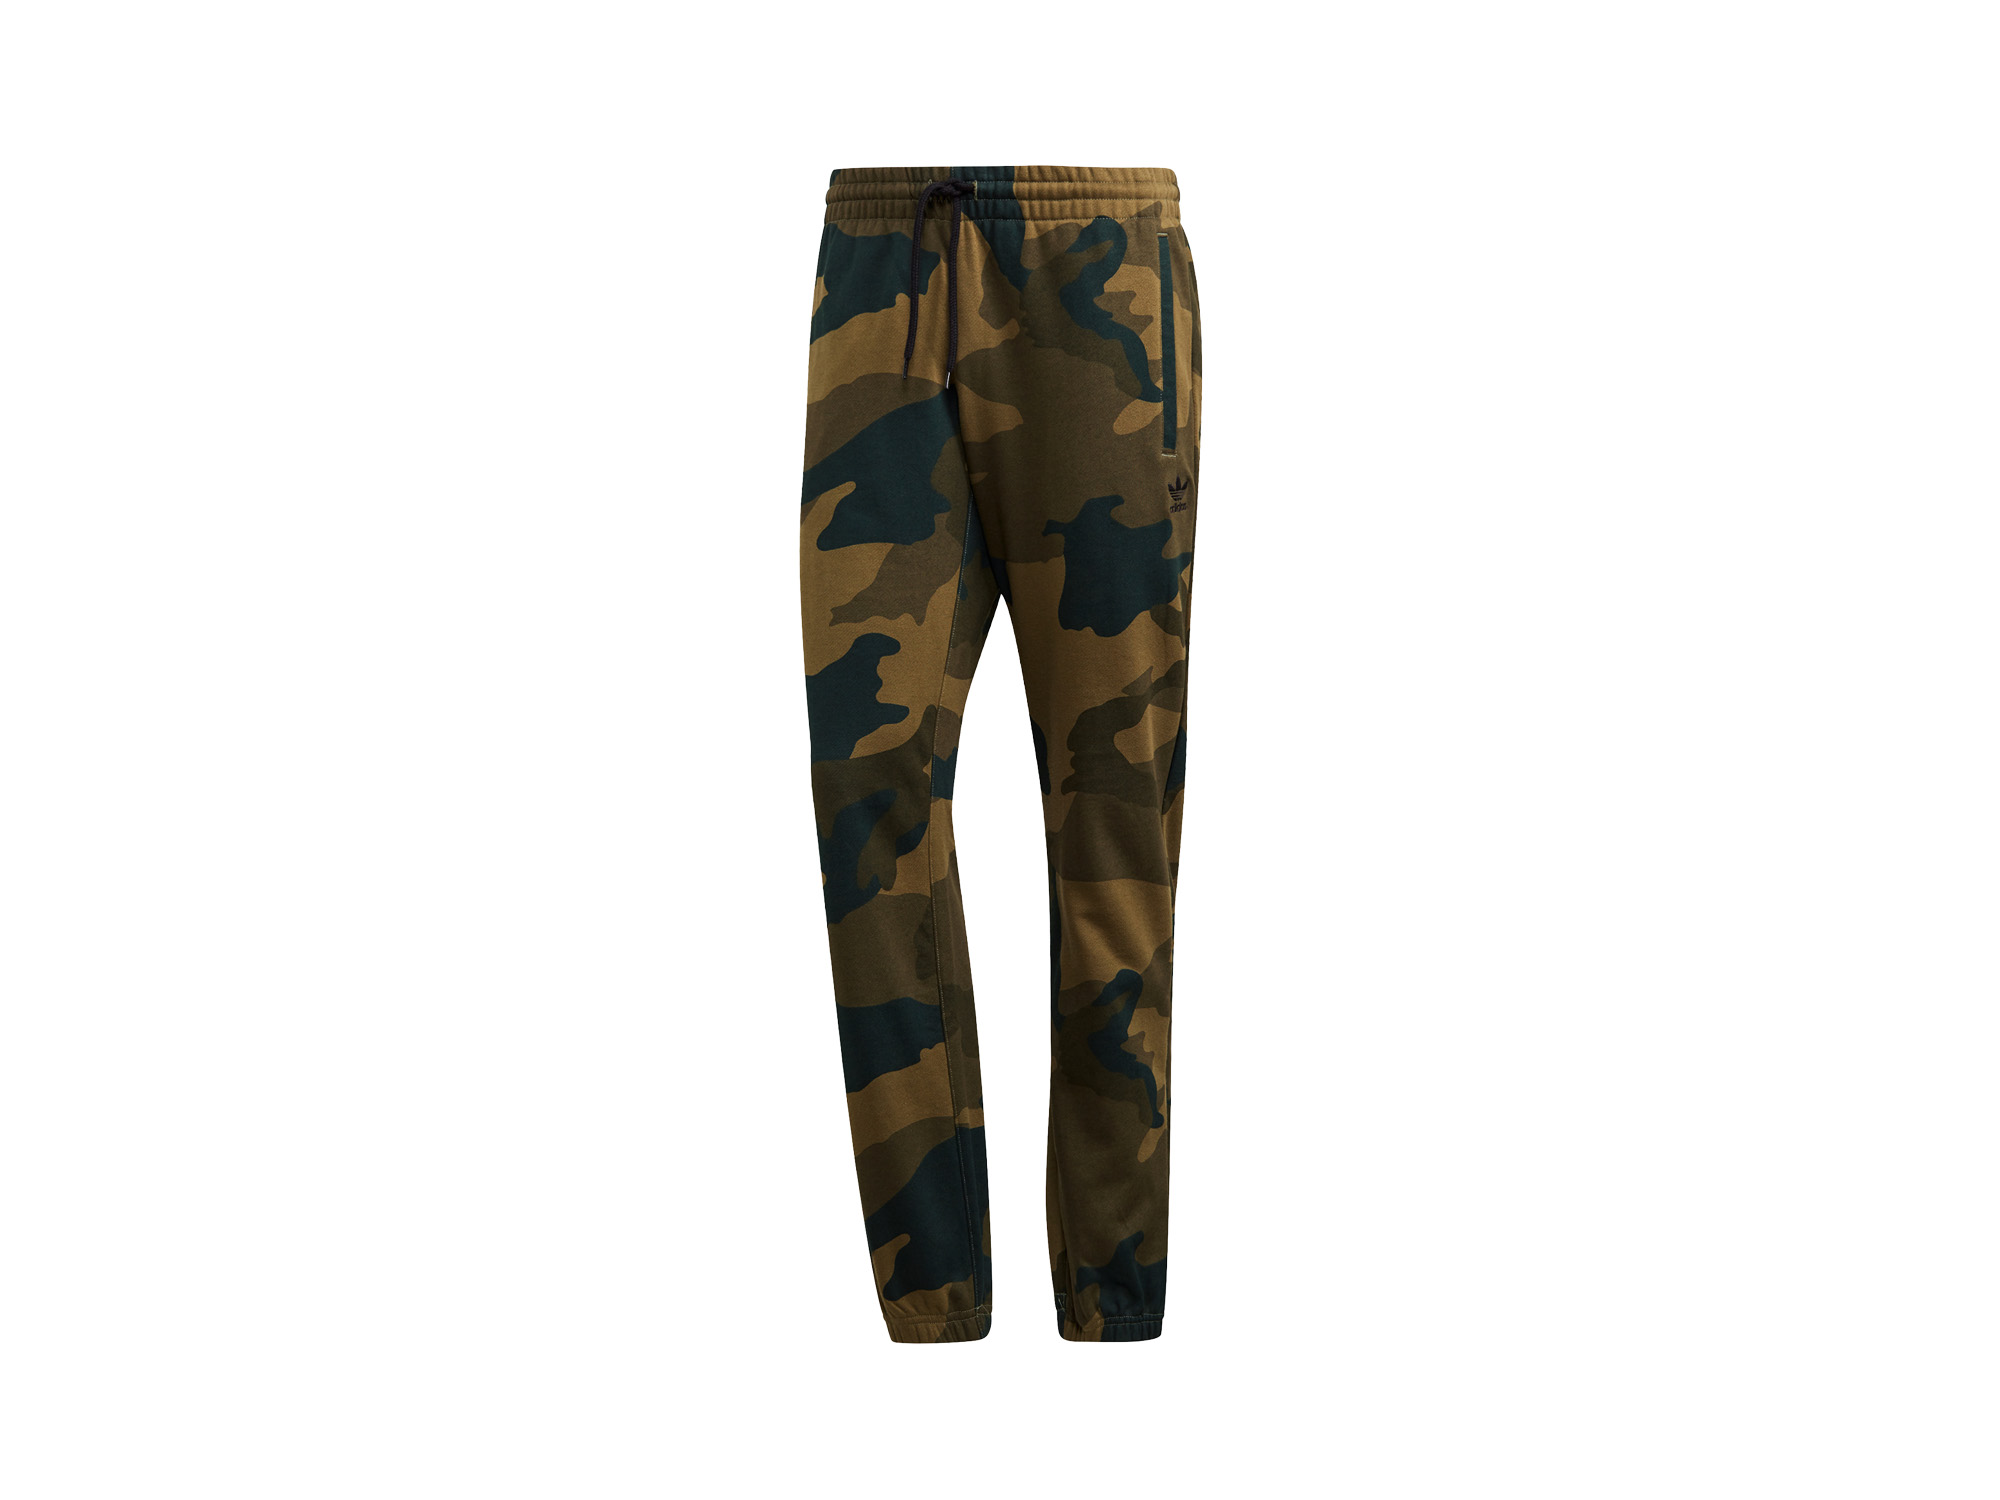 Adidas Originals Camouflage Pants